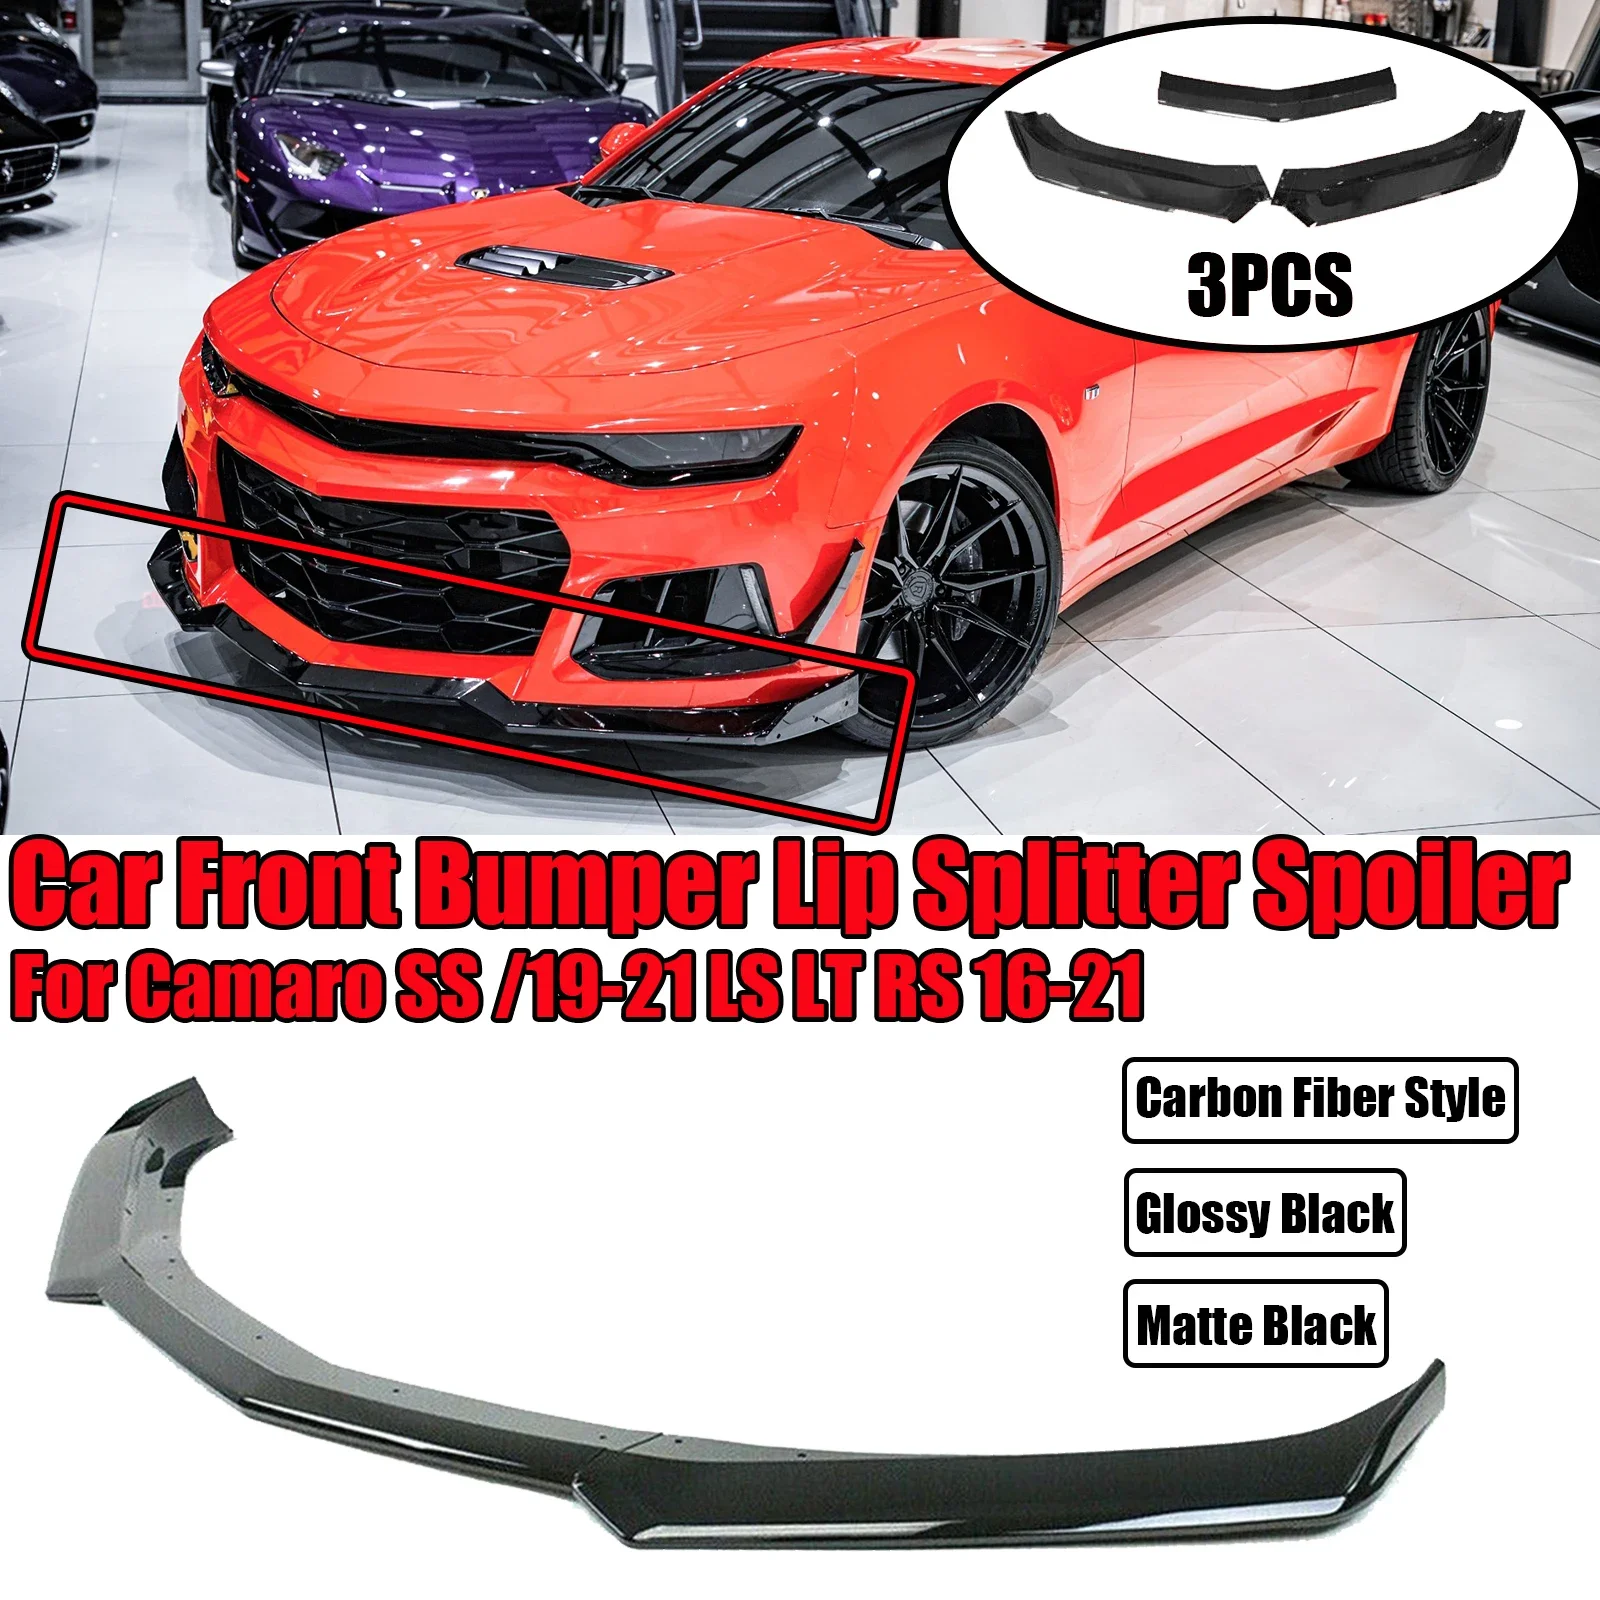 

3PCS For 2016-2021 Chevy Camaro SS / 2019-2021 LS LT RS Car Front Bumper Lip Splitter Spoiler Body Kit Carbon Fiber Style